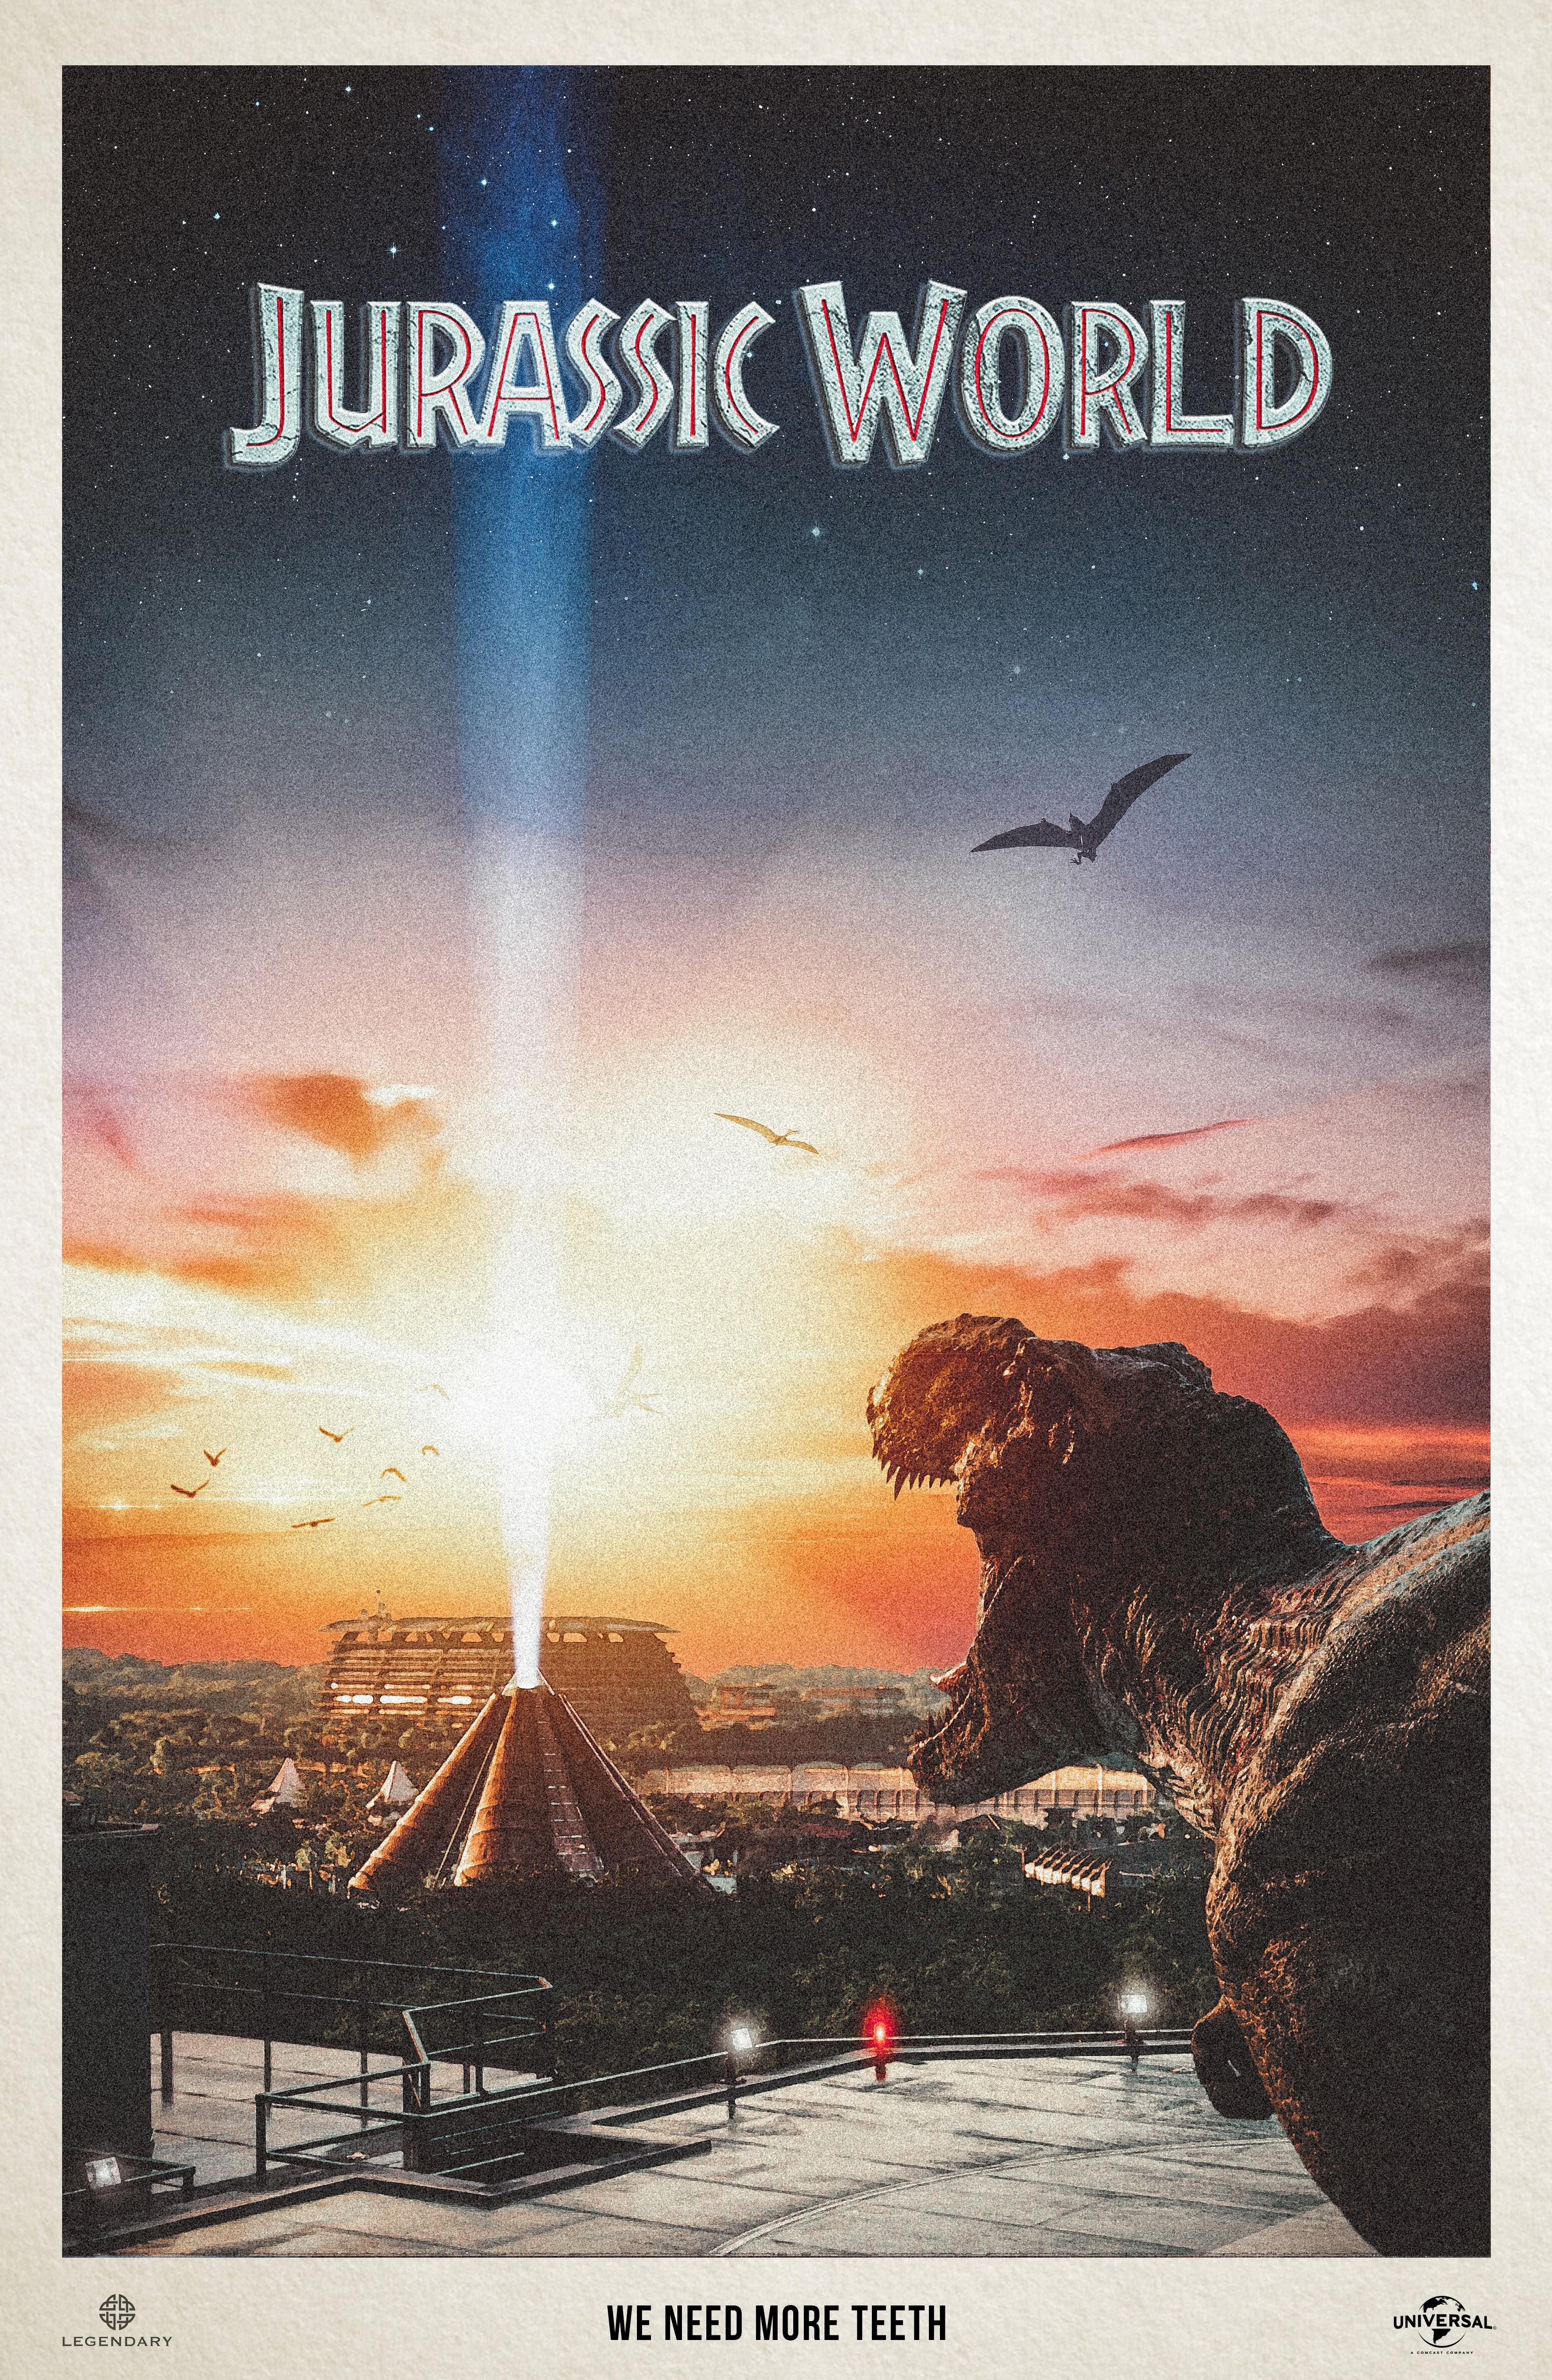 Jurassic World Dominion Logo Wallpaper 4K #6211g